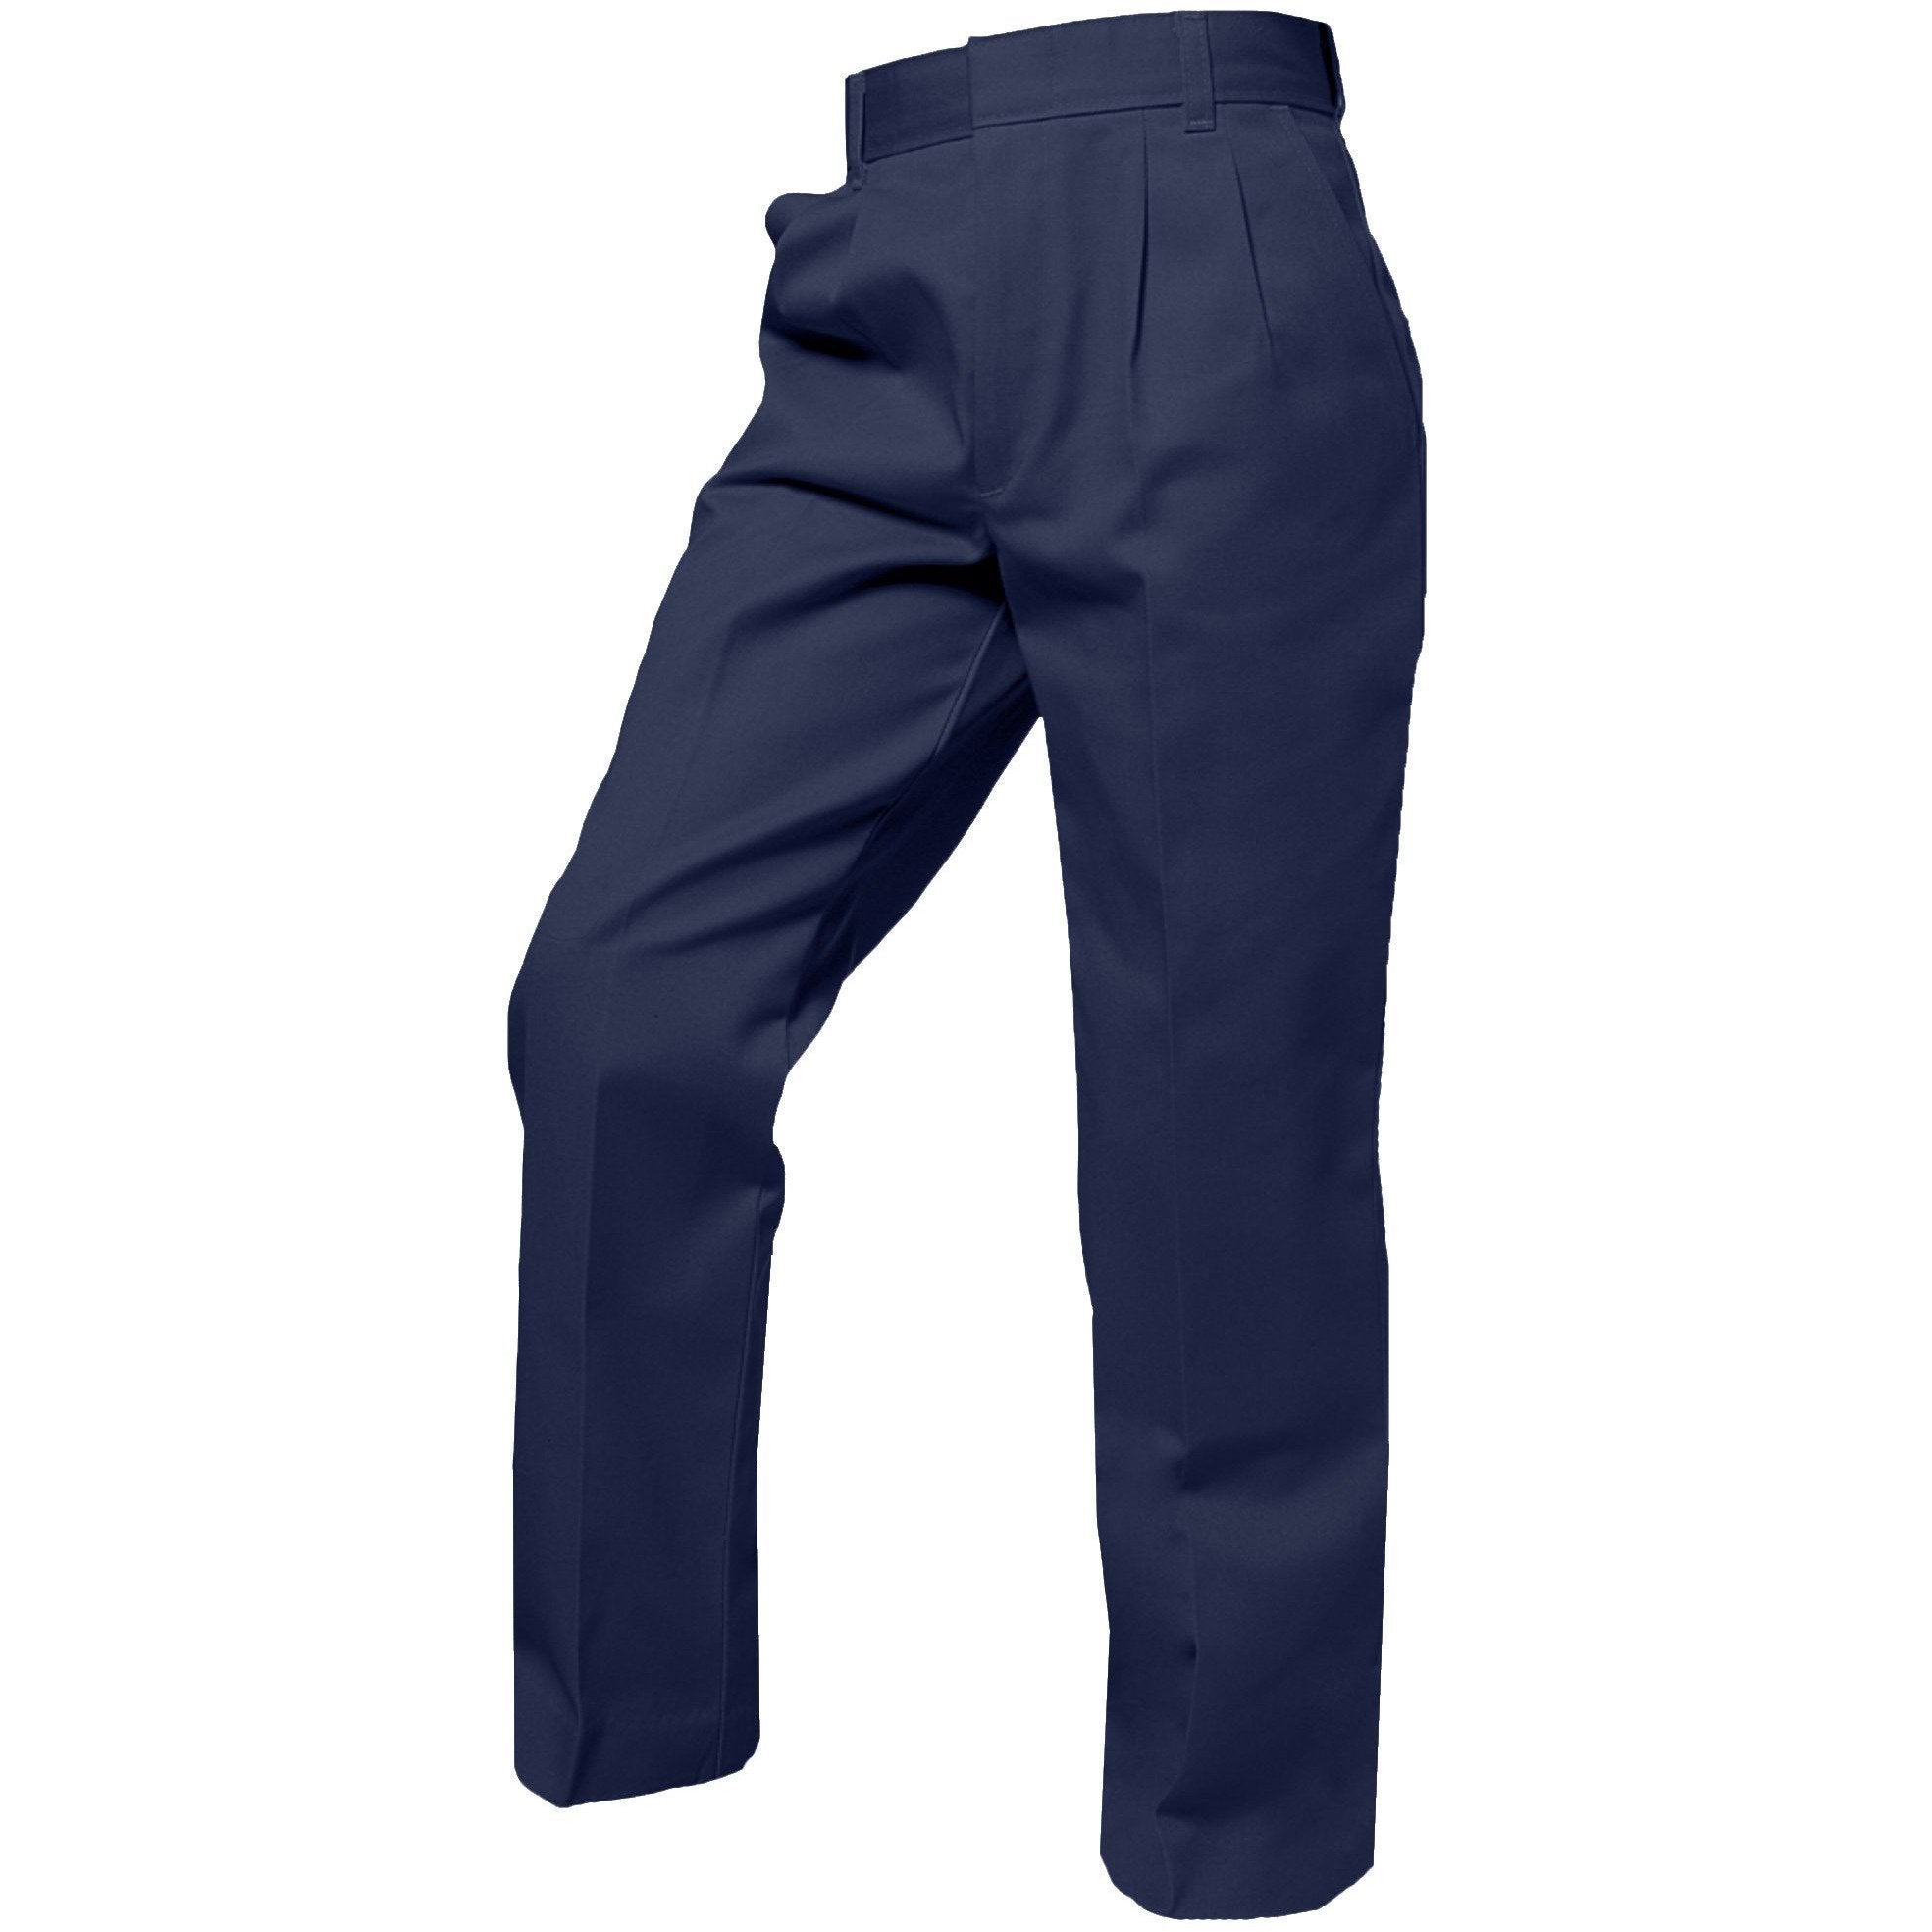 Old Navy Kid Girl Size 10  Navy Blue Skinny Uniform Pants  Retails 20   NWT  eBay